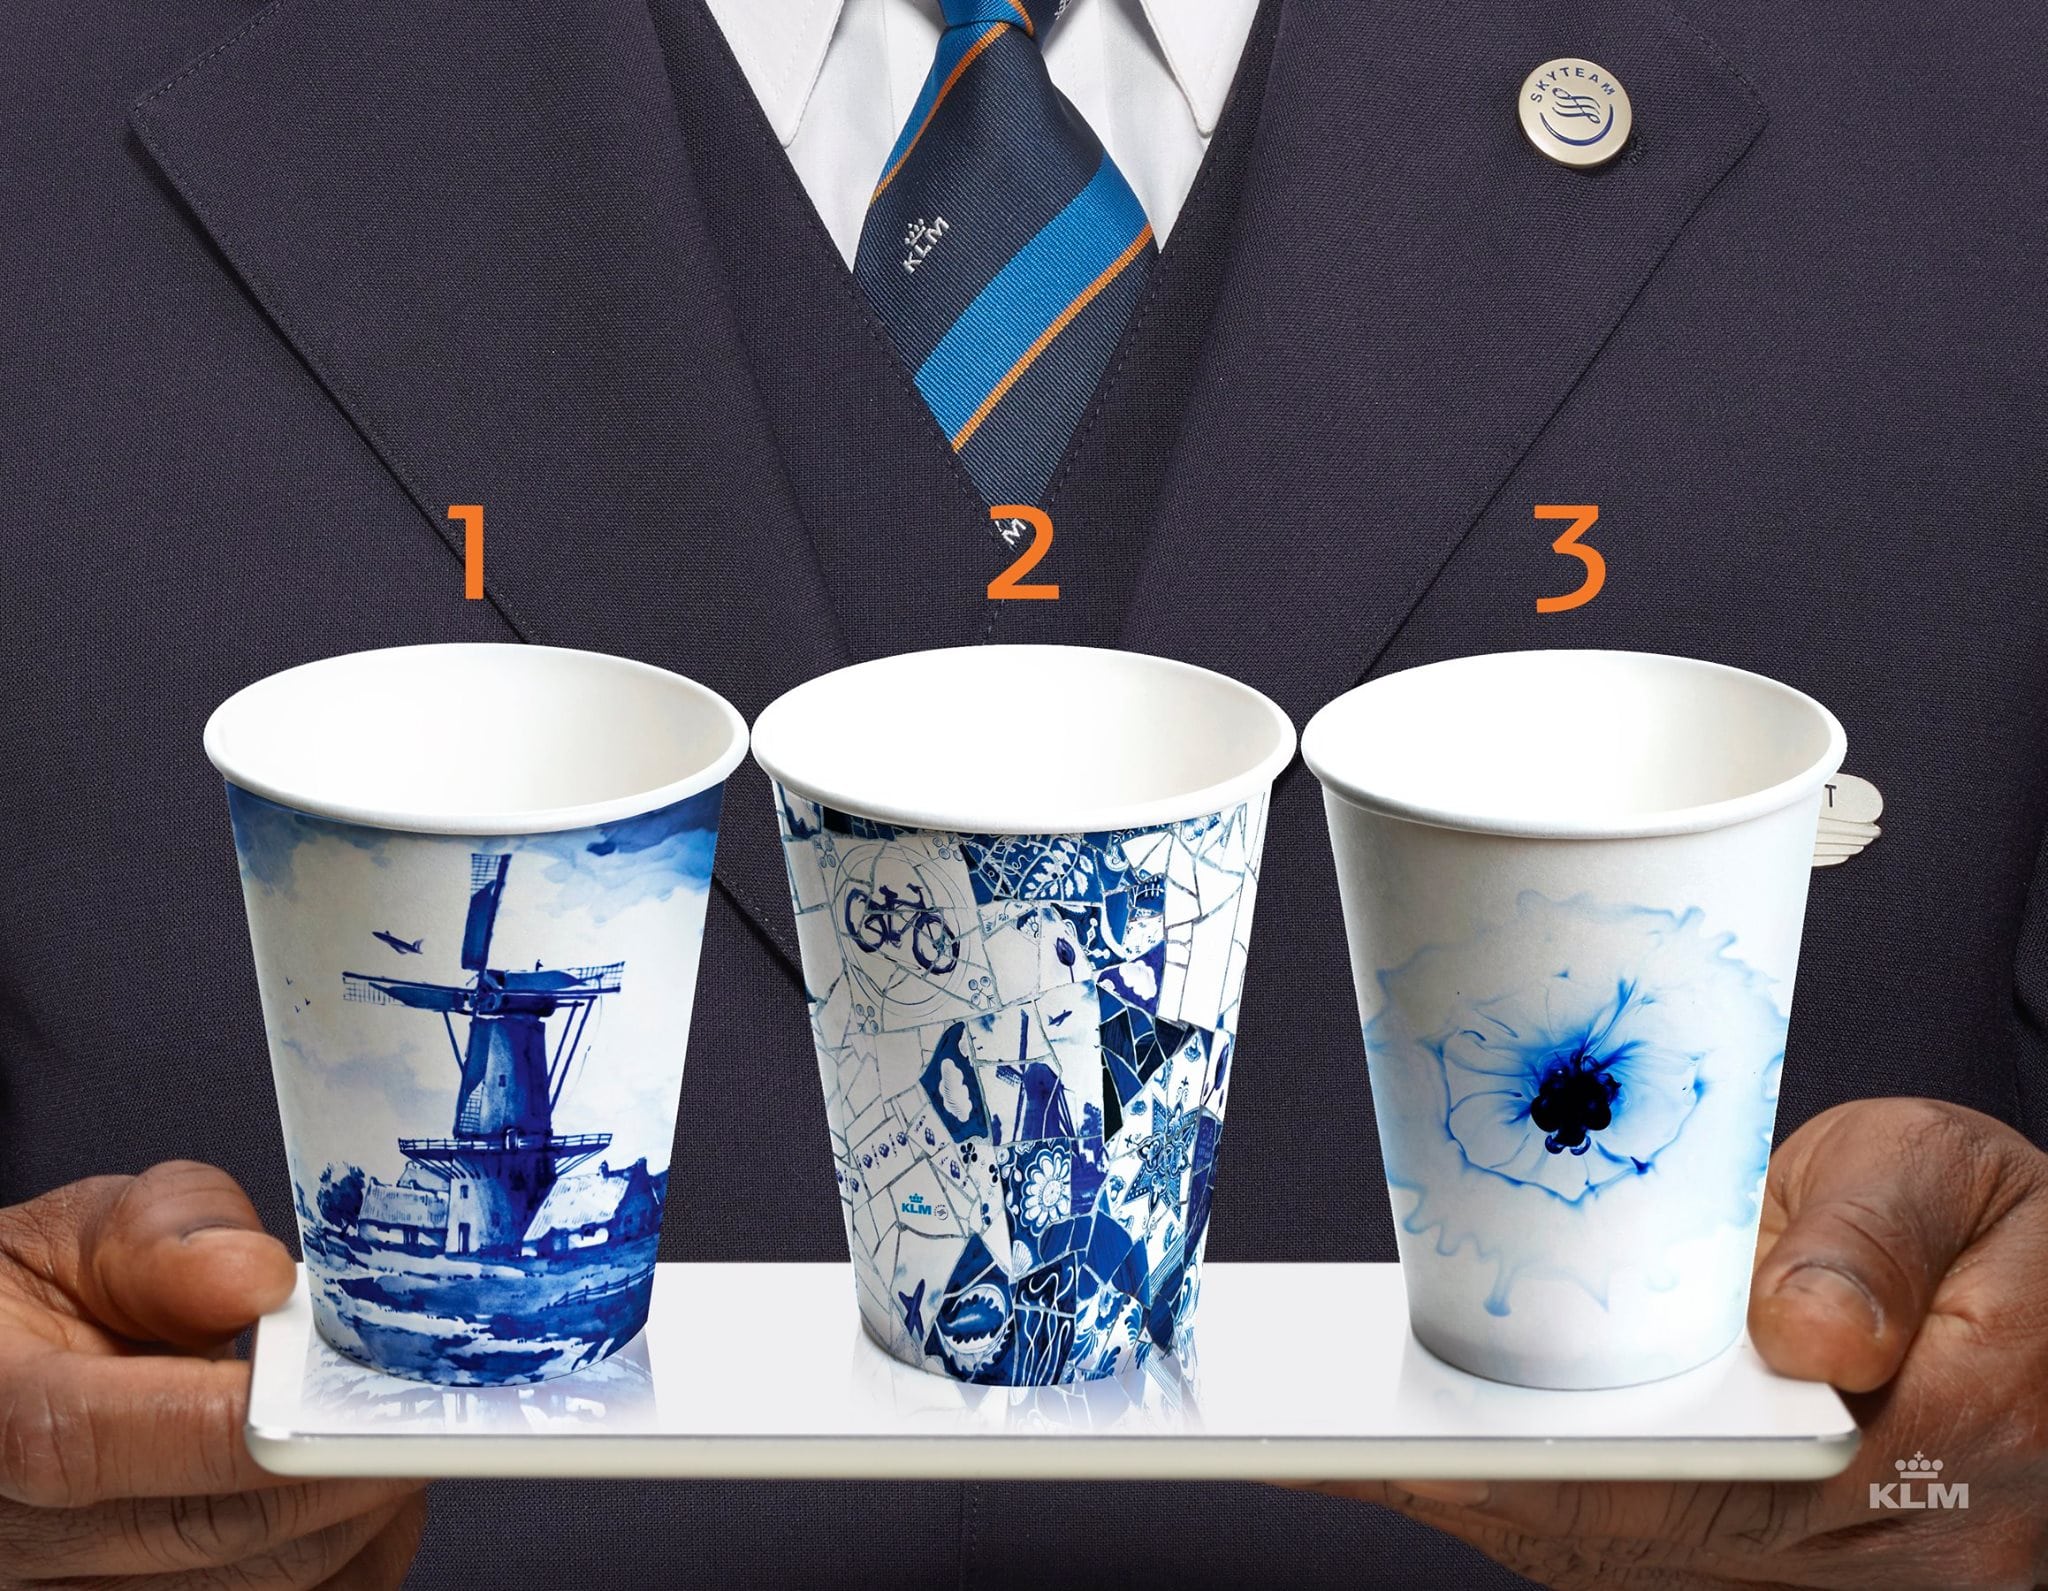 Dutch Delft tile design on coffee cups.